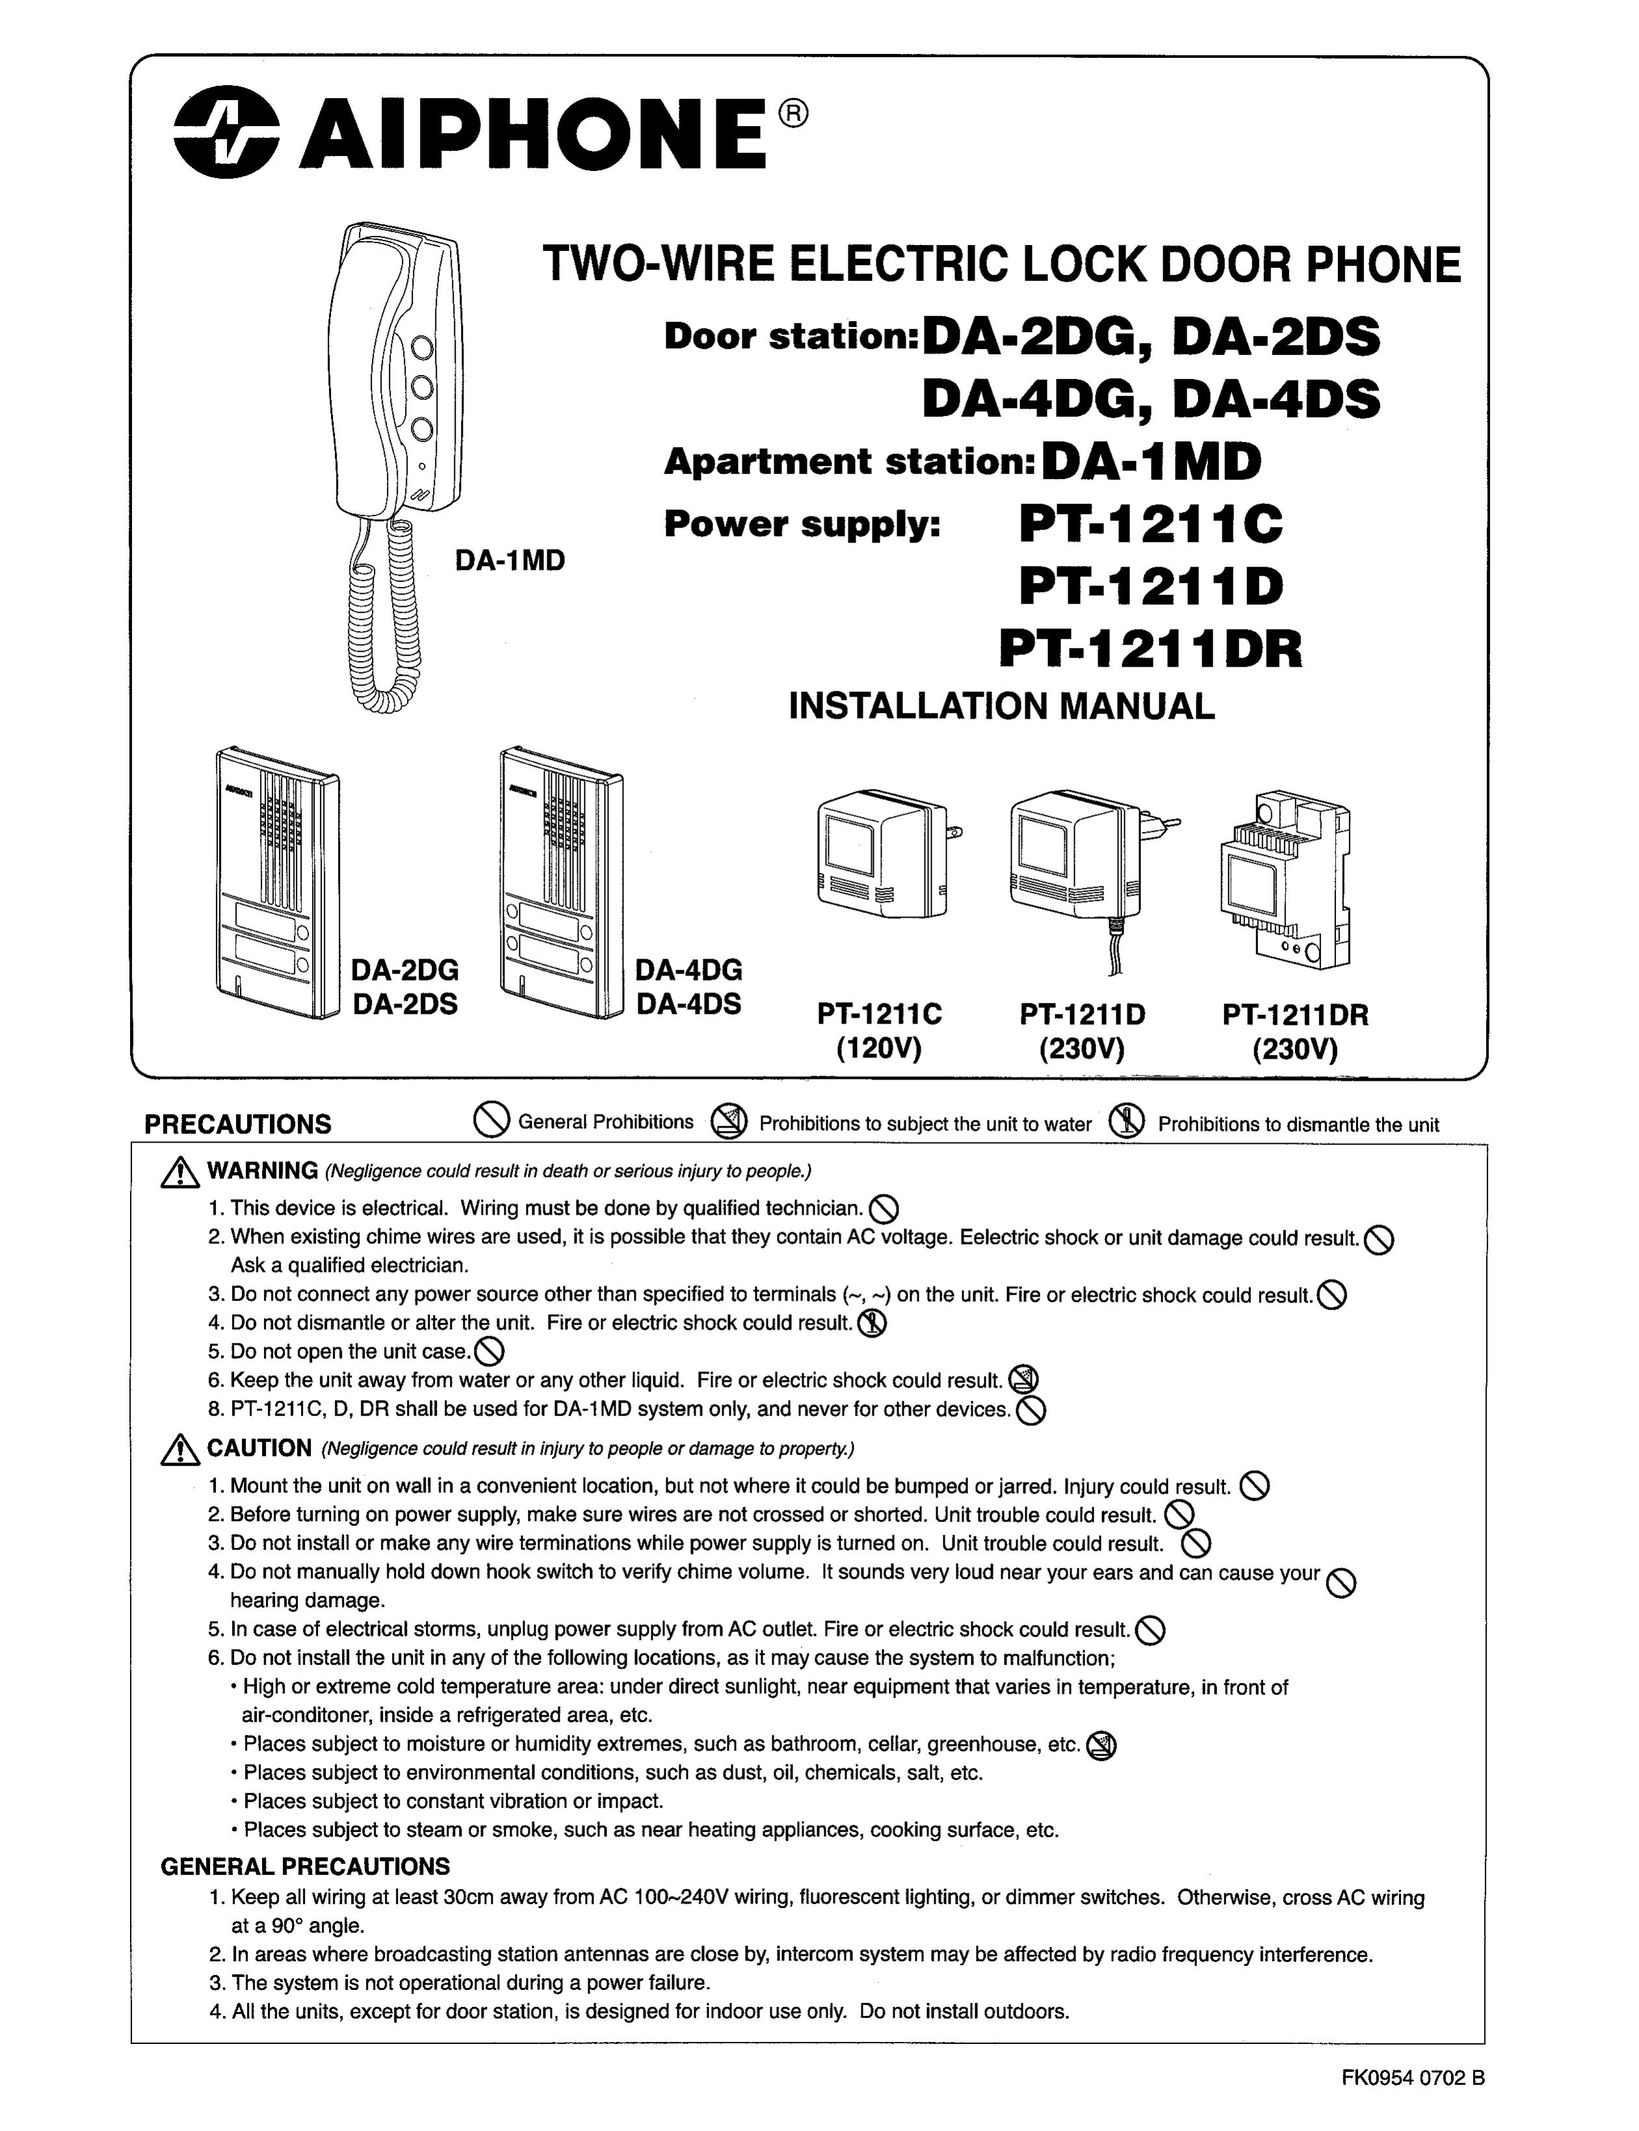 Aiphone DA-2DG Home Security System User Manual